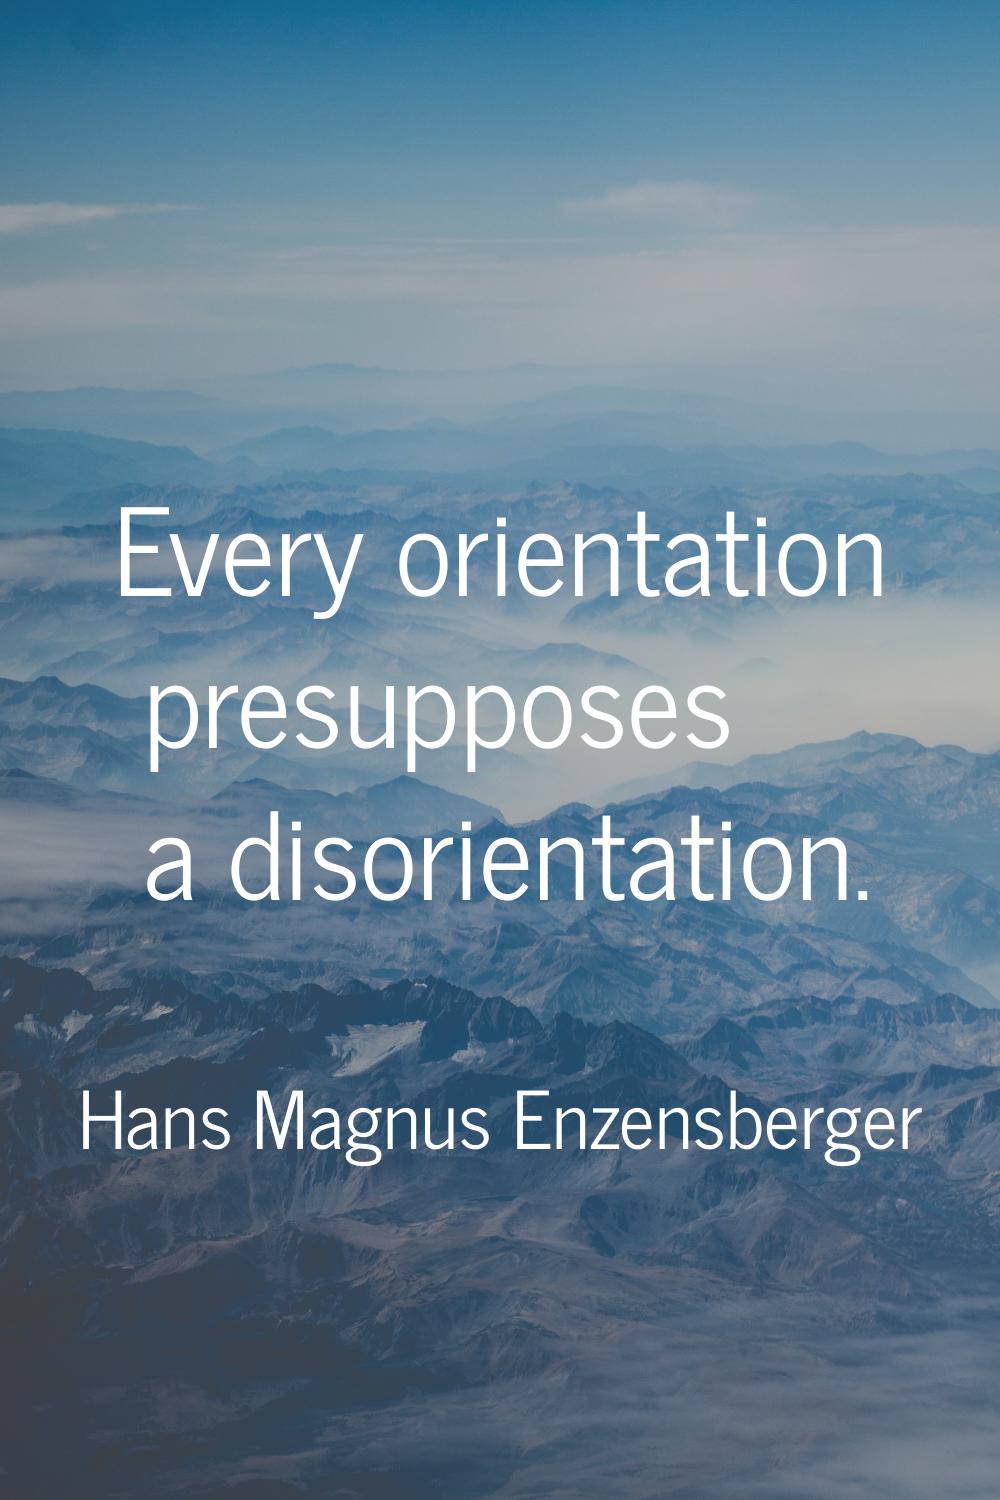 Every orientation presupposes a disorientation.